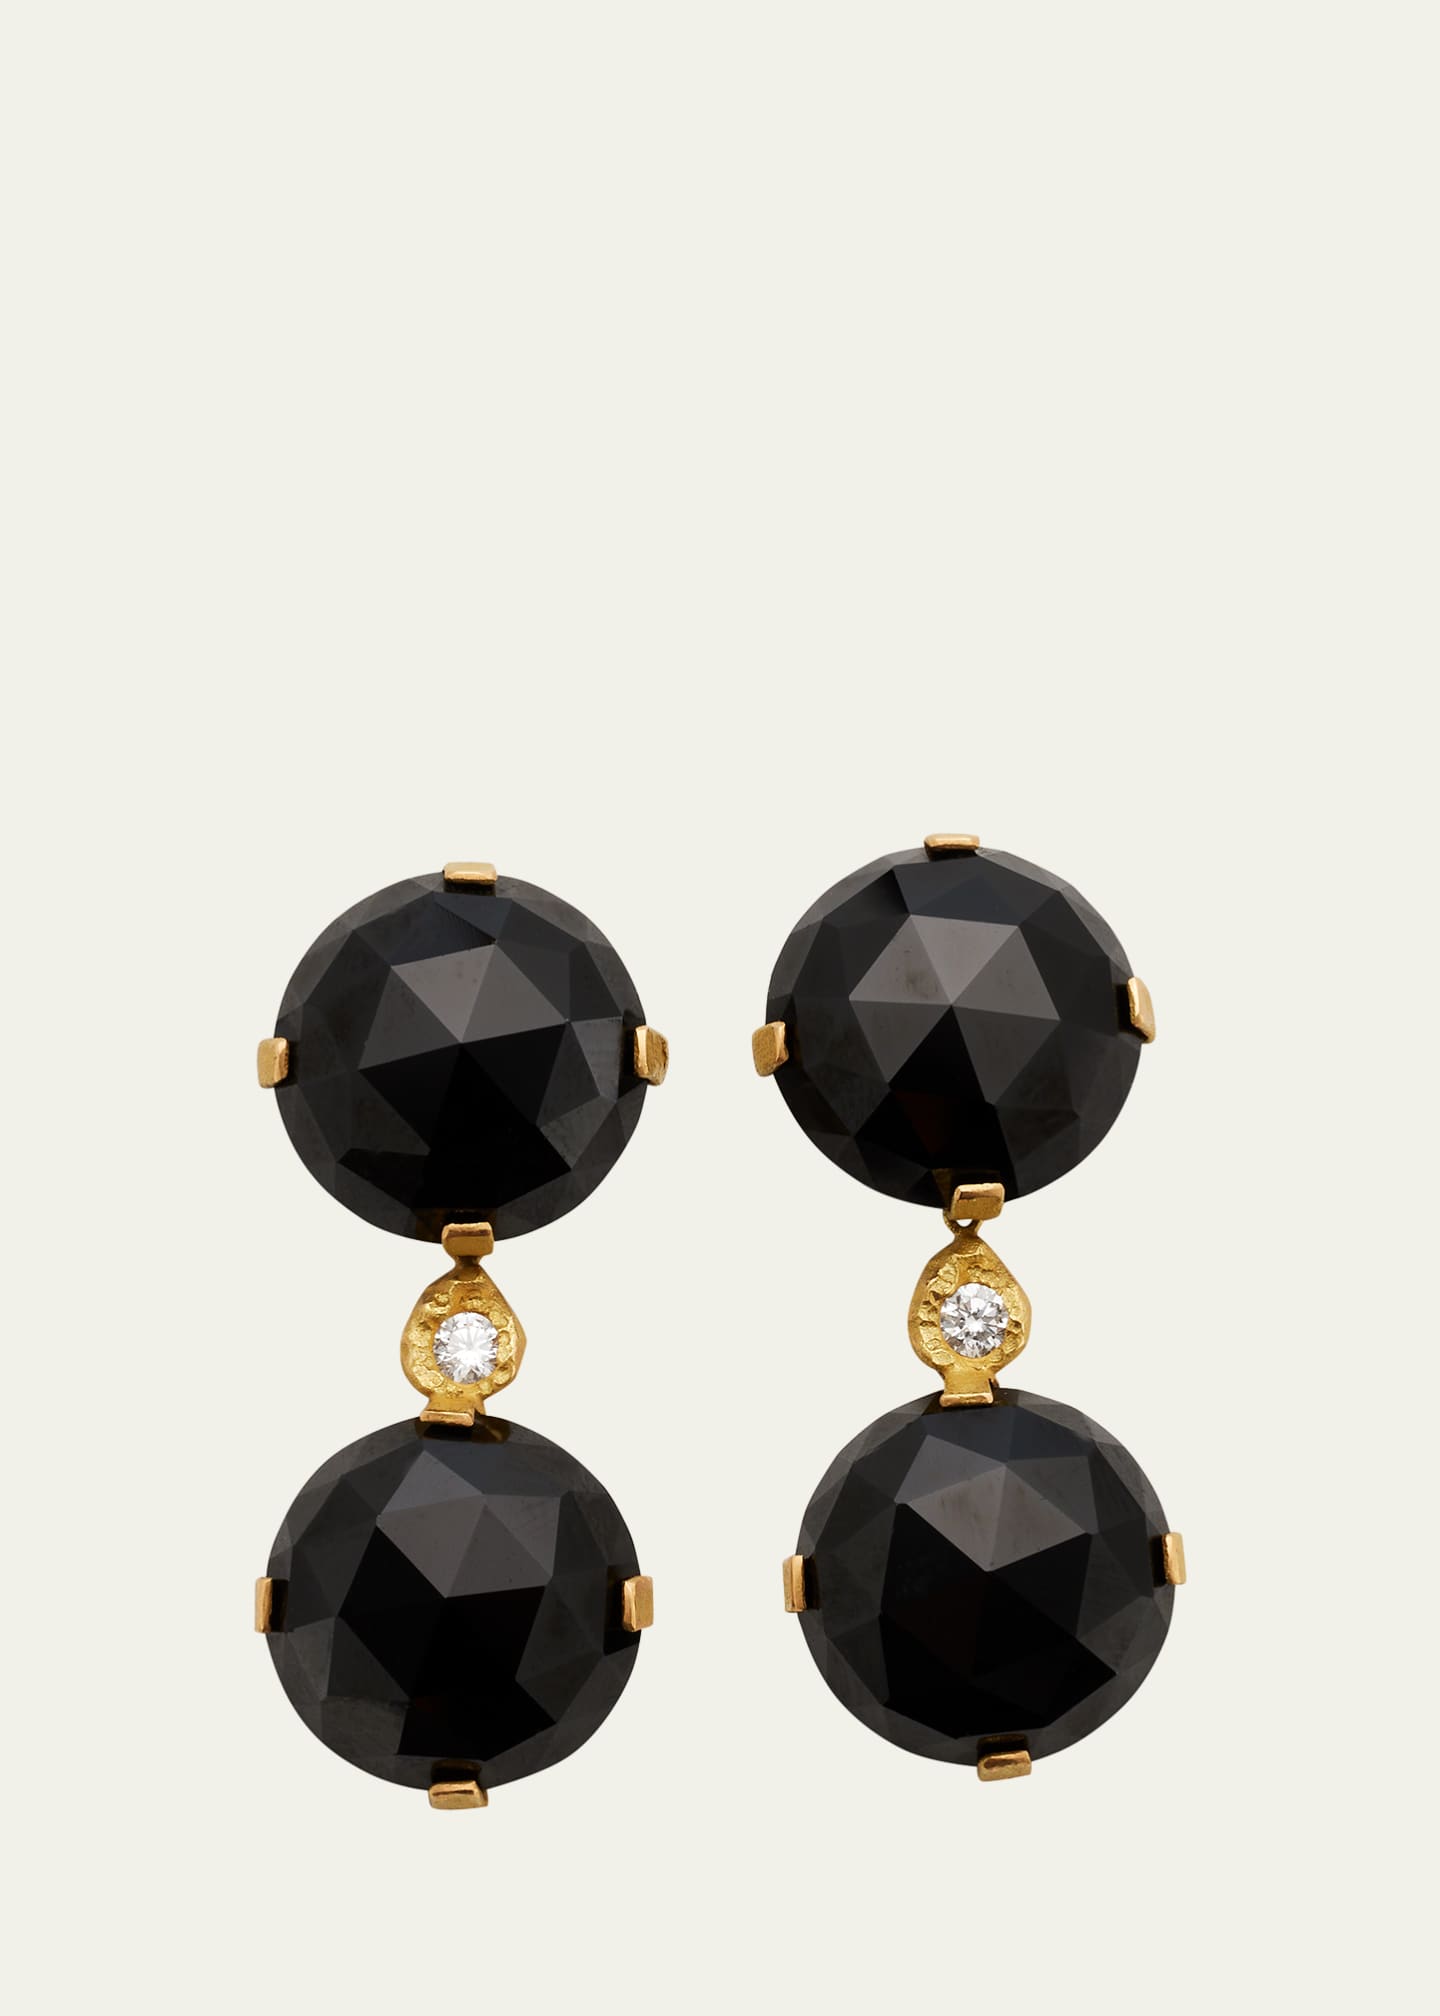 Elhanati Evita Big Earrings 18K Solid Yellow Gold with Black Spinel and Top Wesselton VVS Diamonds - Bergdorf Goodman